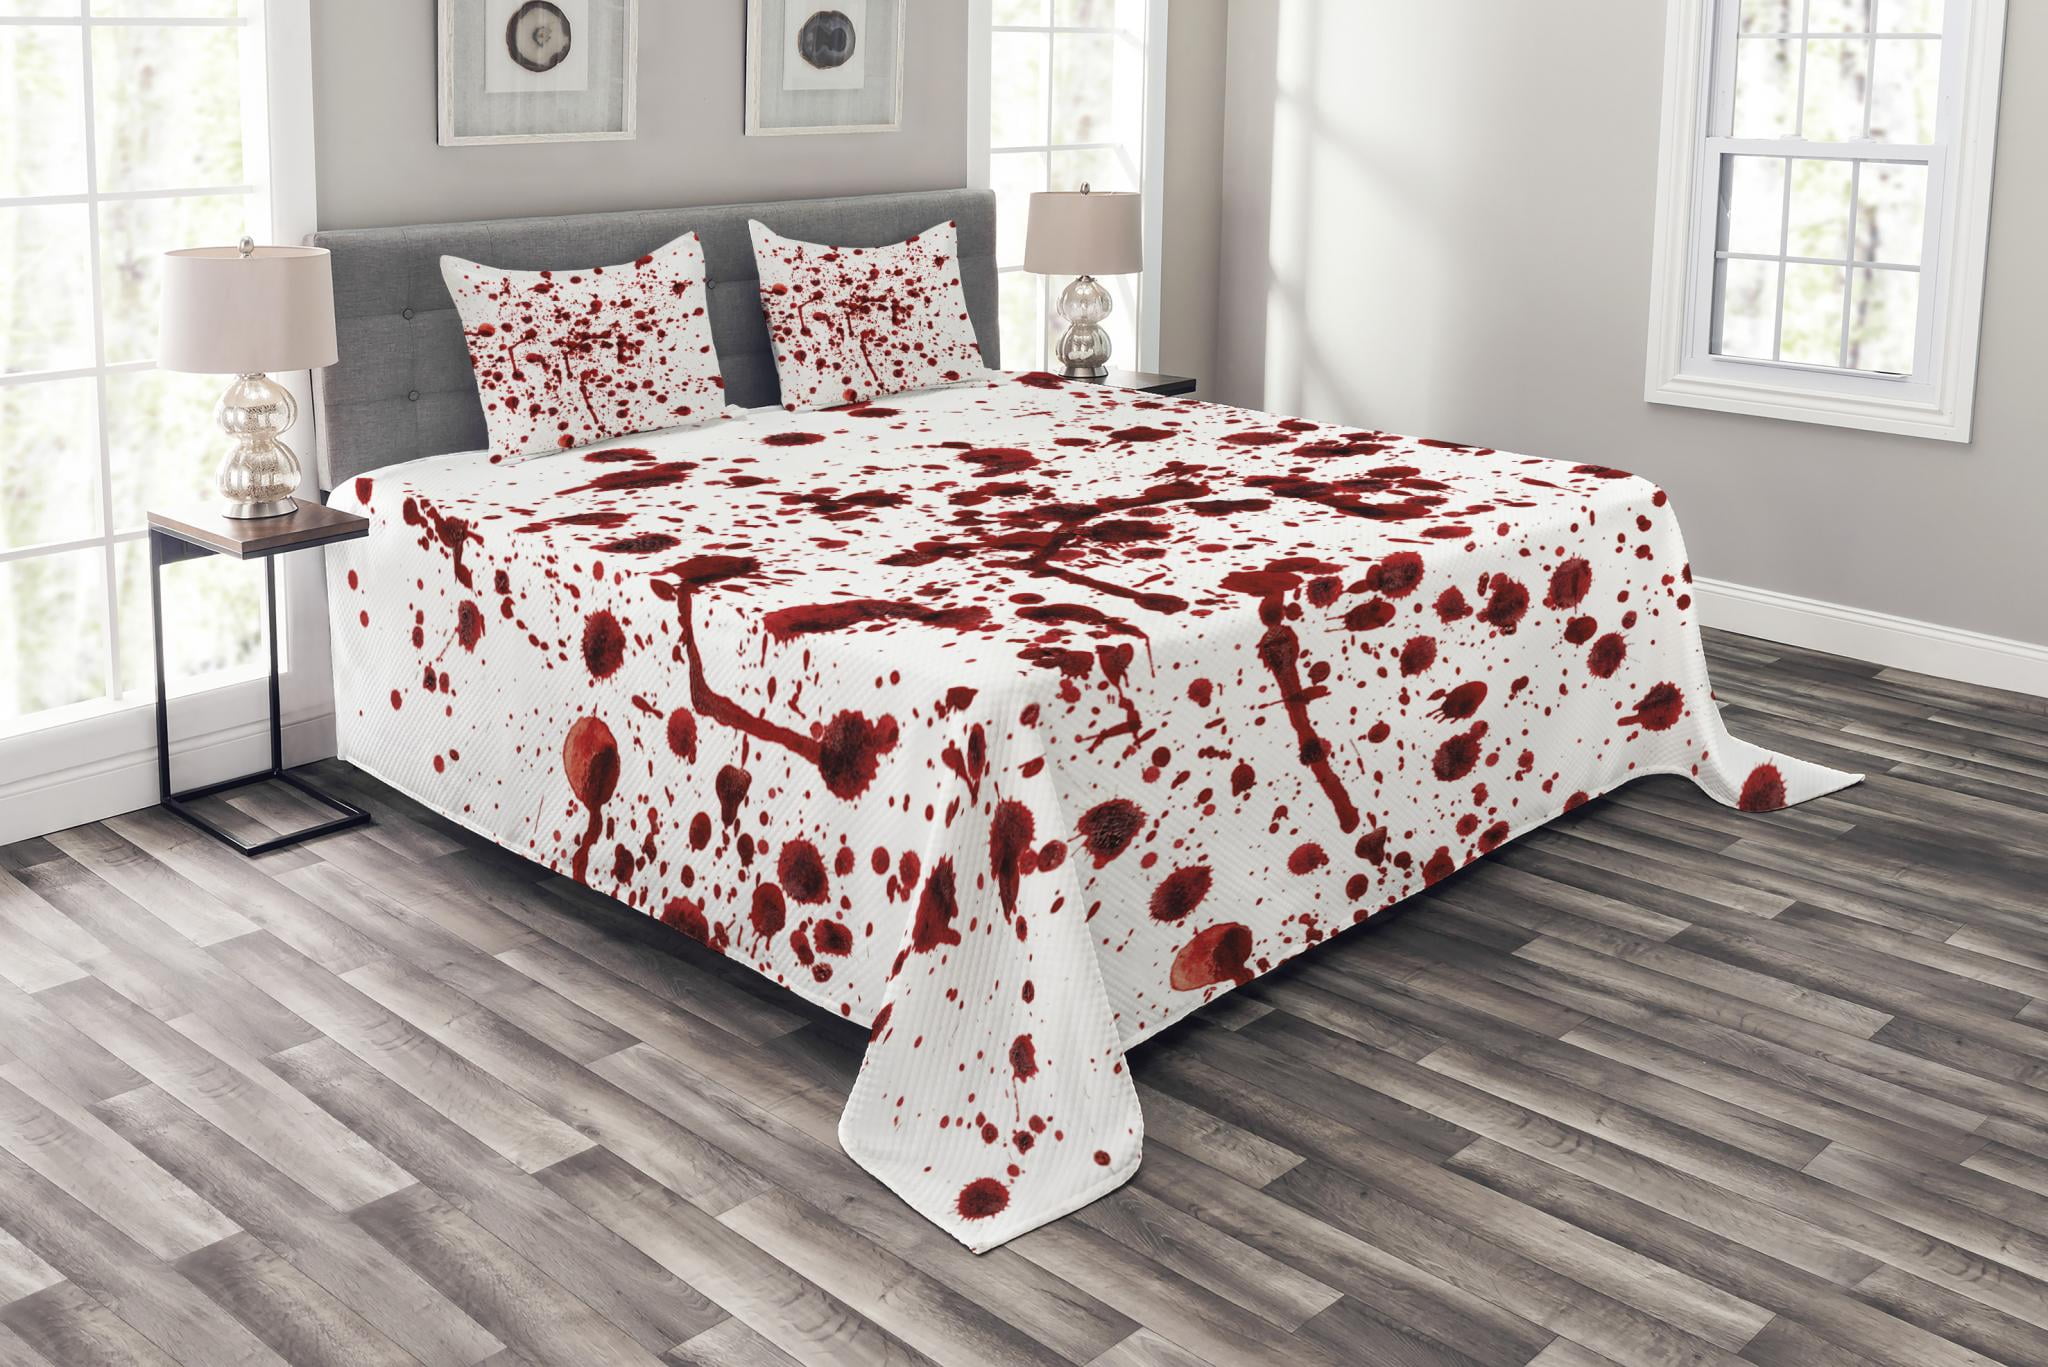 Heart of House Hadley Teal Pintuck Bedding Set Single Bed Duvet Cover Pillowcase 